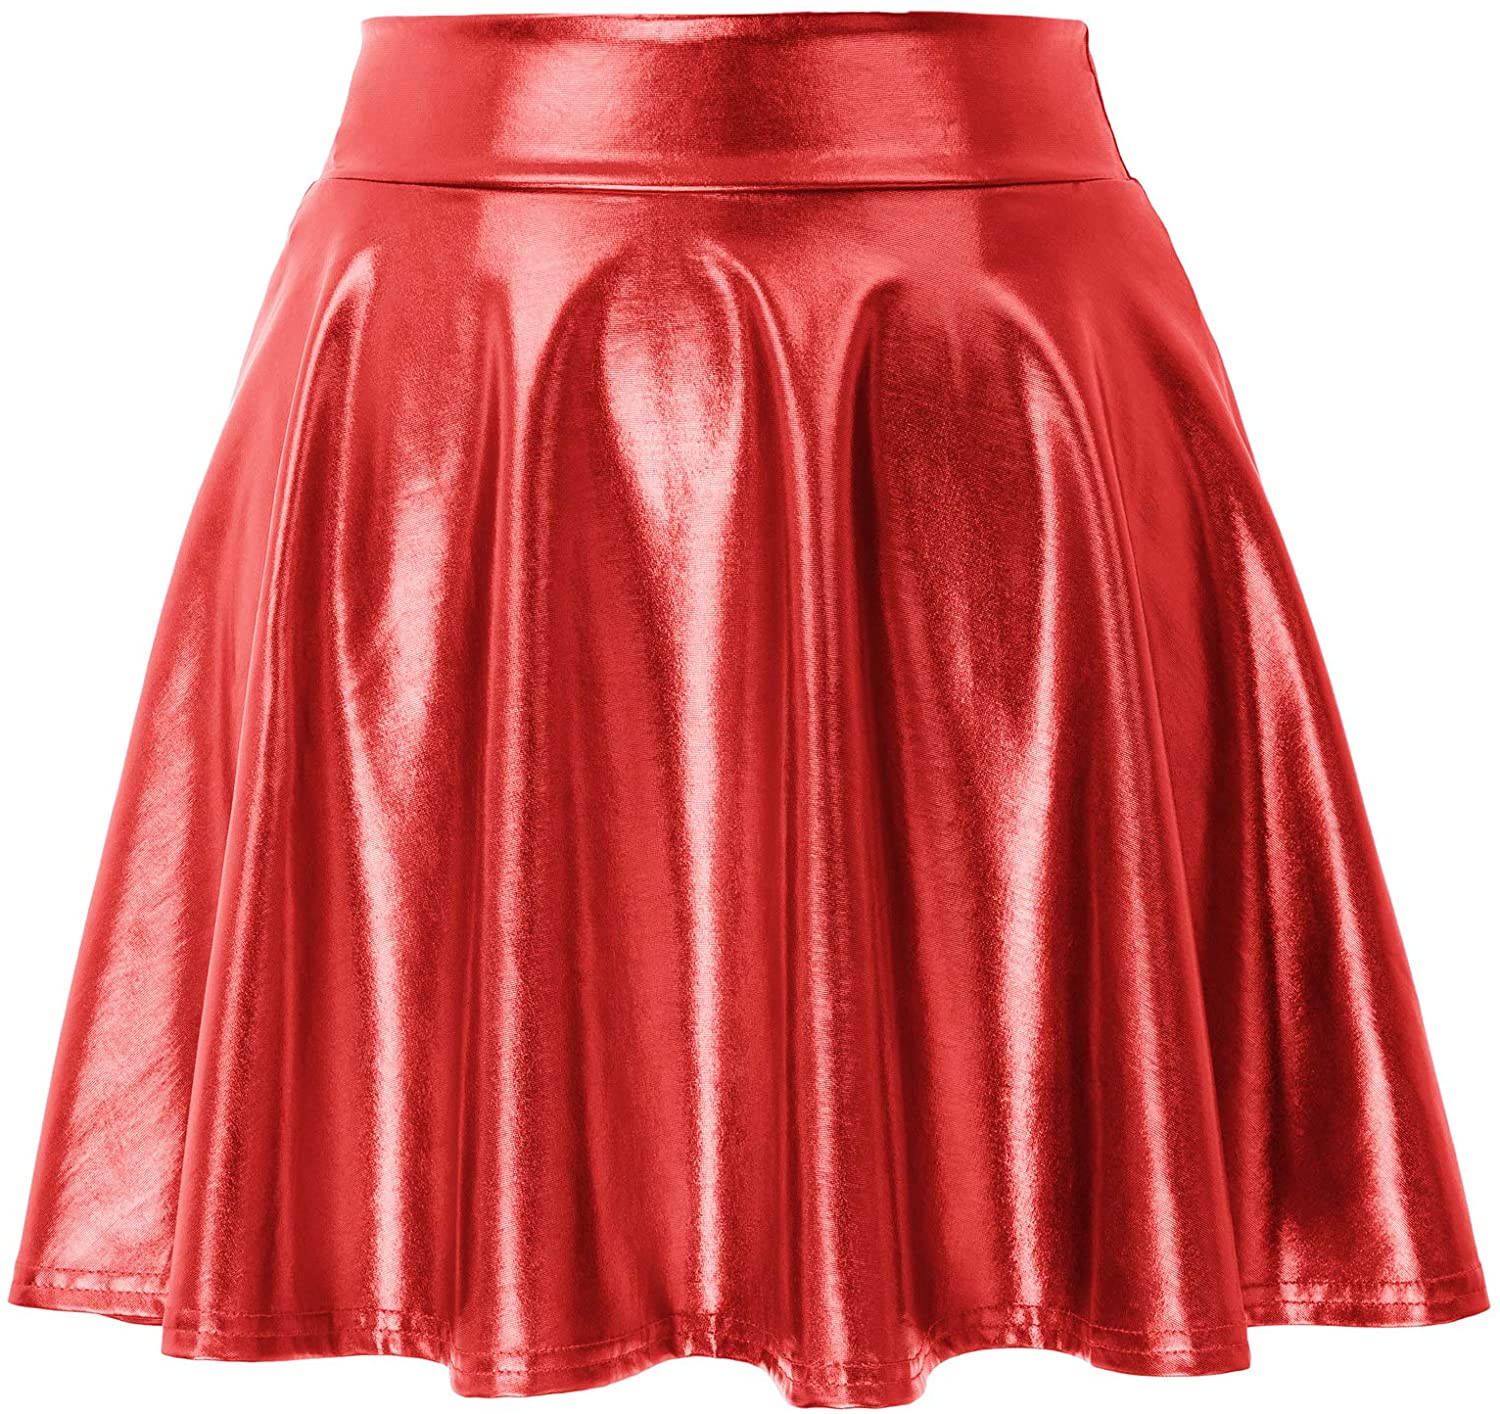 Kate Kasin Womens Shiny Metallic Skater Skirt Fashion Flared Mini Skirt 